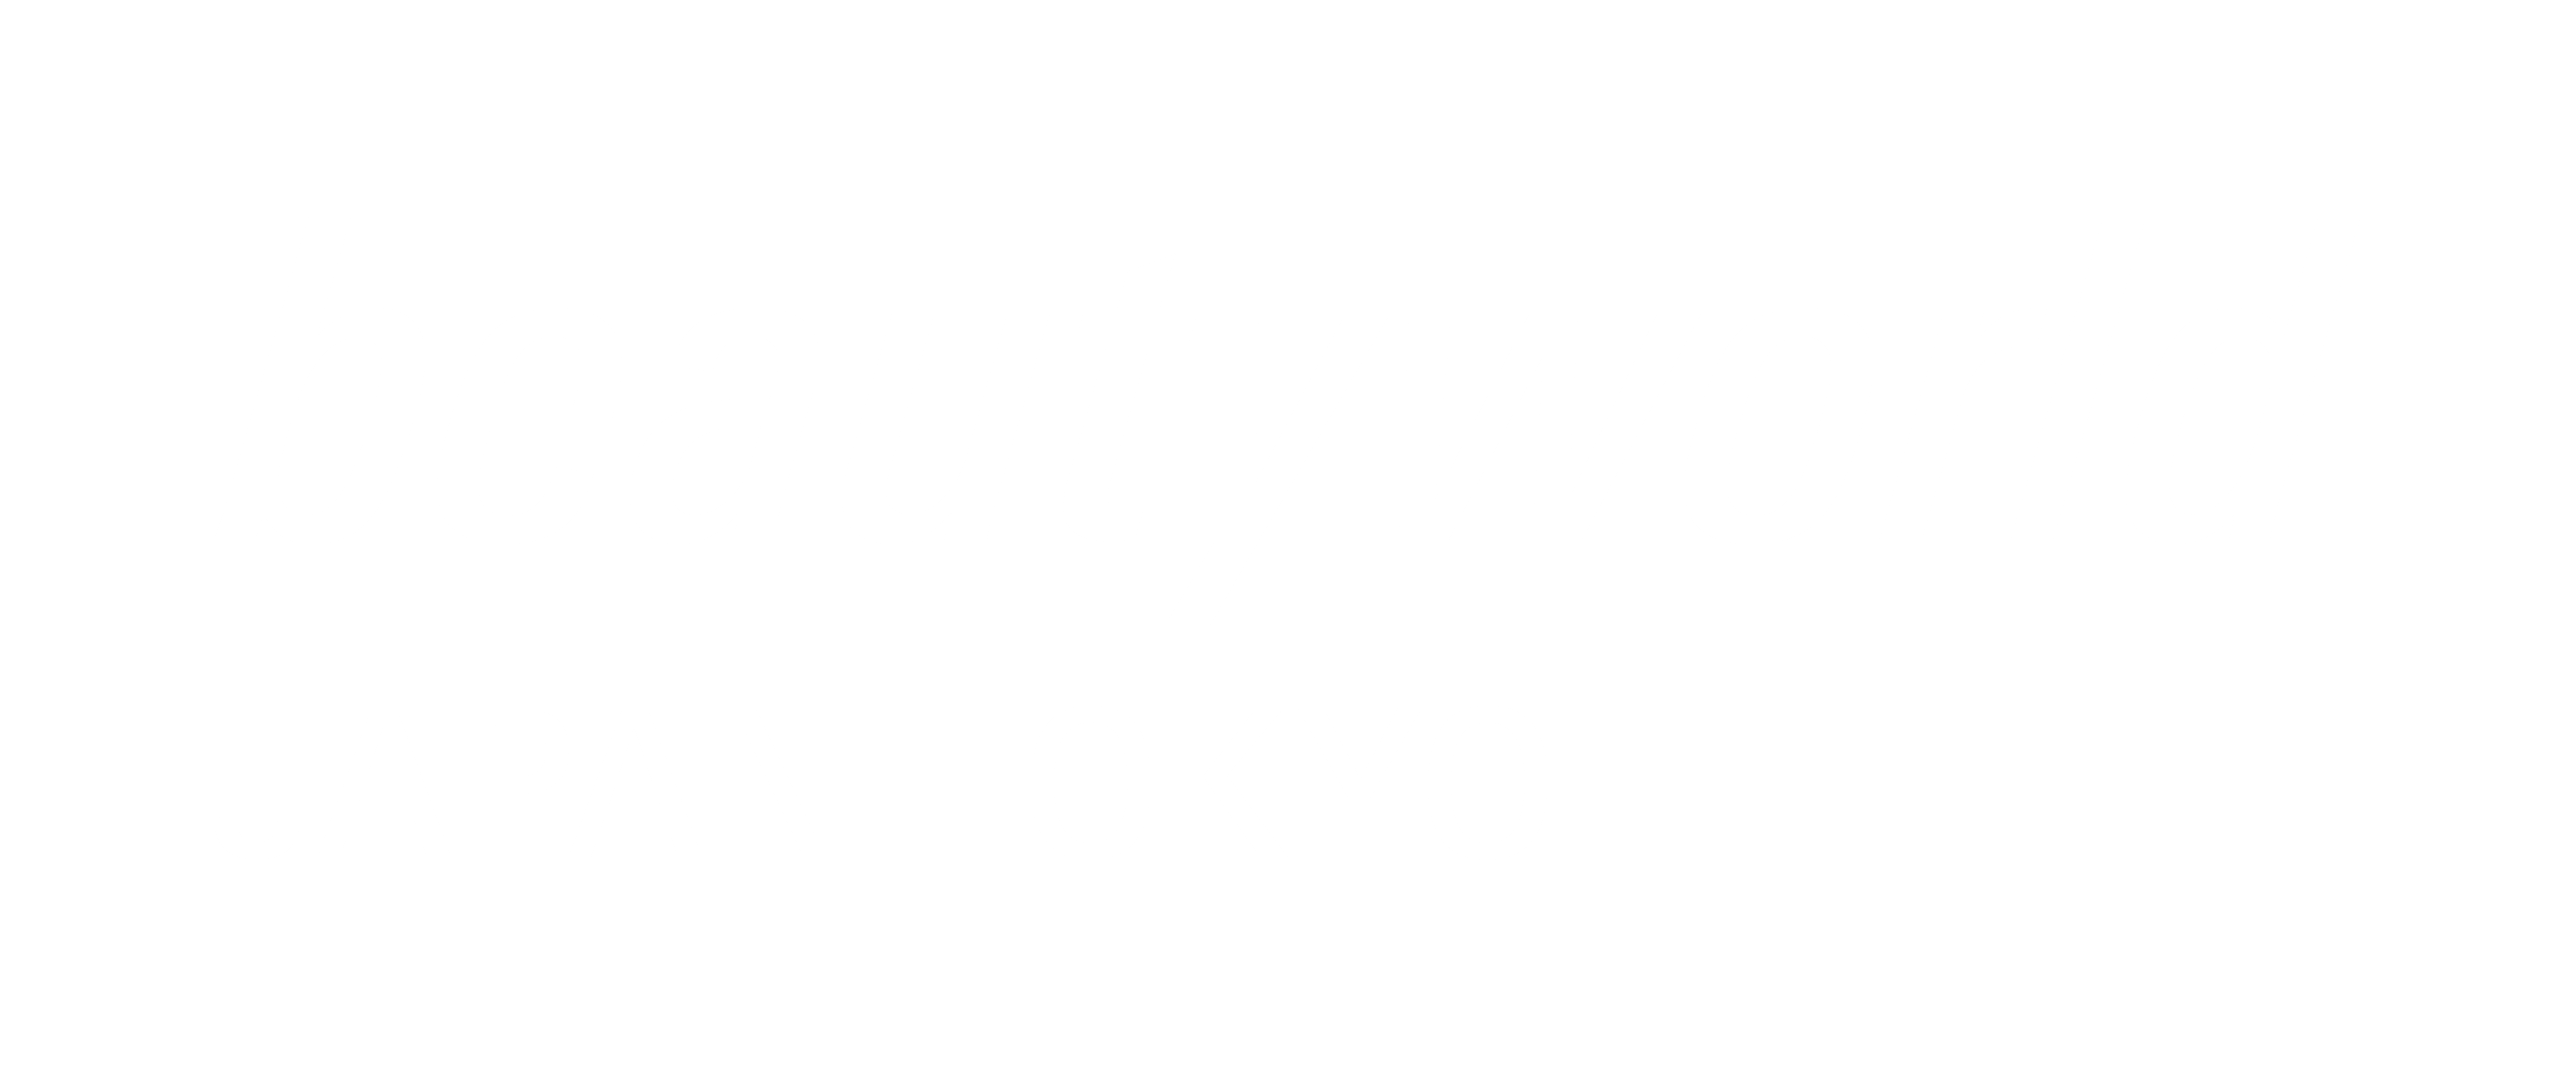 beautyworld-JP-TOK_White